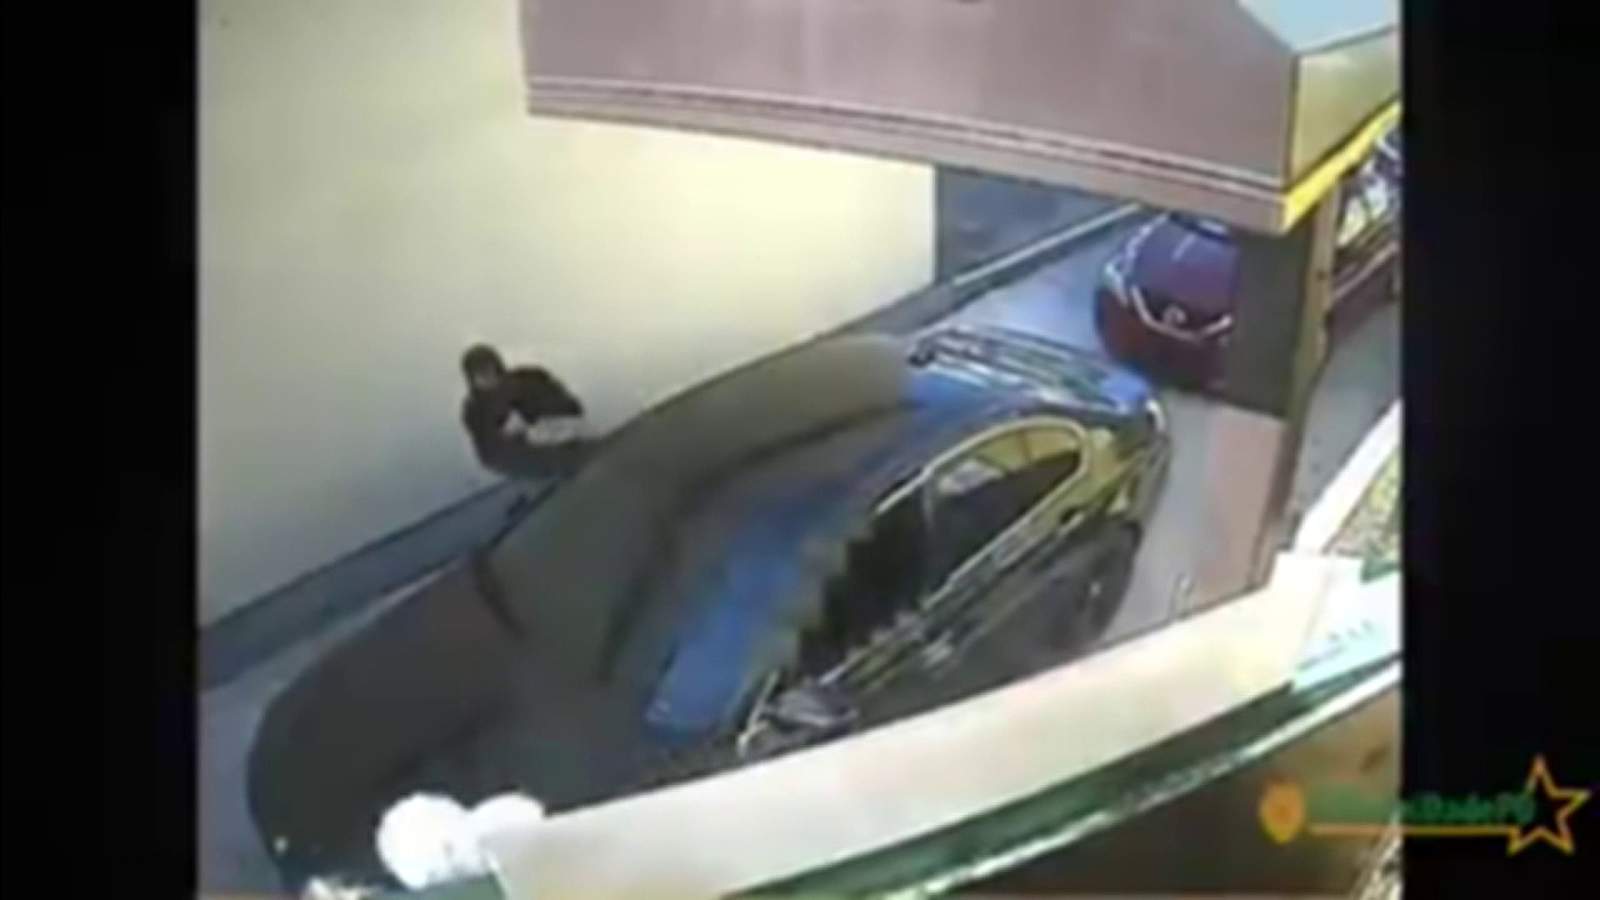 WATCH: Brazen thieves ambush car in Pollo Tropical drive-thru